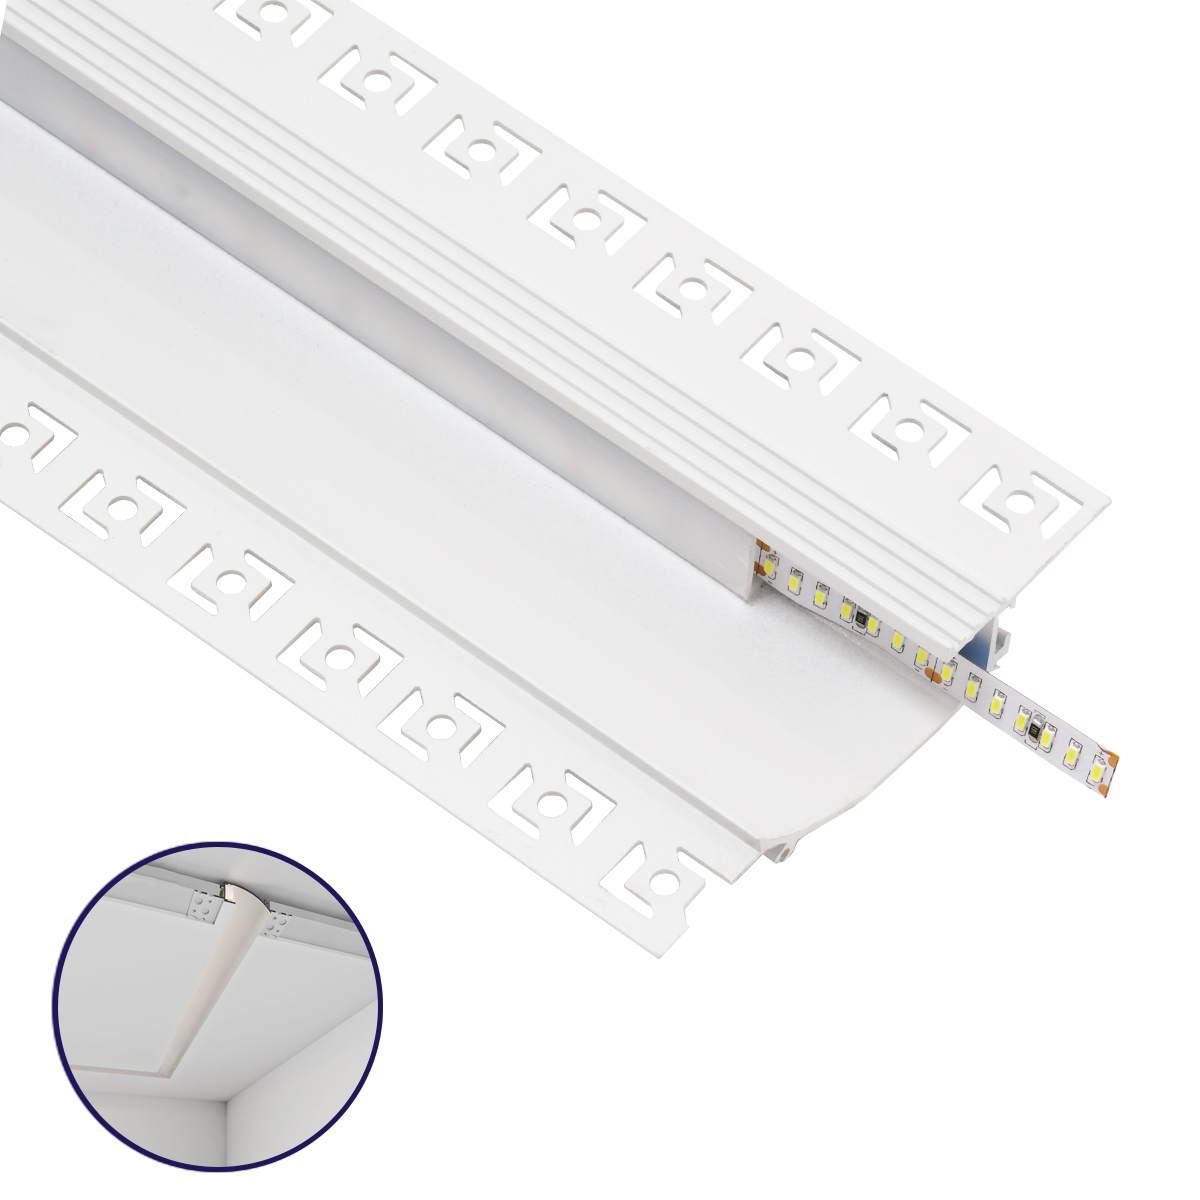 GloboStar® PLASTERBOARD-PROFILE 70840-3M Προφίλ Αλουμινίου – Βάση & Ψύκτρα Ταινίας LED με Λευκό Γαλακτερό Κάλυμμα – Χωνευτή Χρήση σε Γυψοσανίδα για Δημιουργία Κρυφού Φωτισμού – Trimless – Πατητό Κάλυμμα – Λευκό – 3 Μέτρα – Πακέτο 5 Τεμαχίων – Μ300 x Π9.7 x Υ2cm